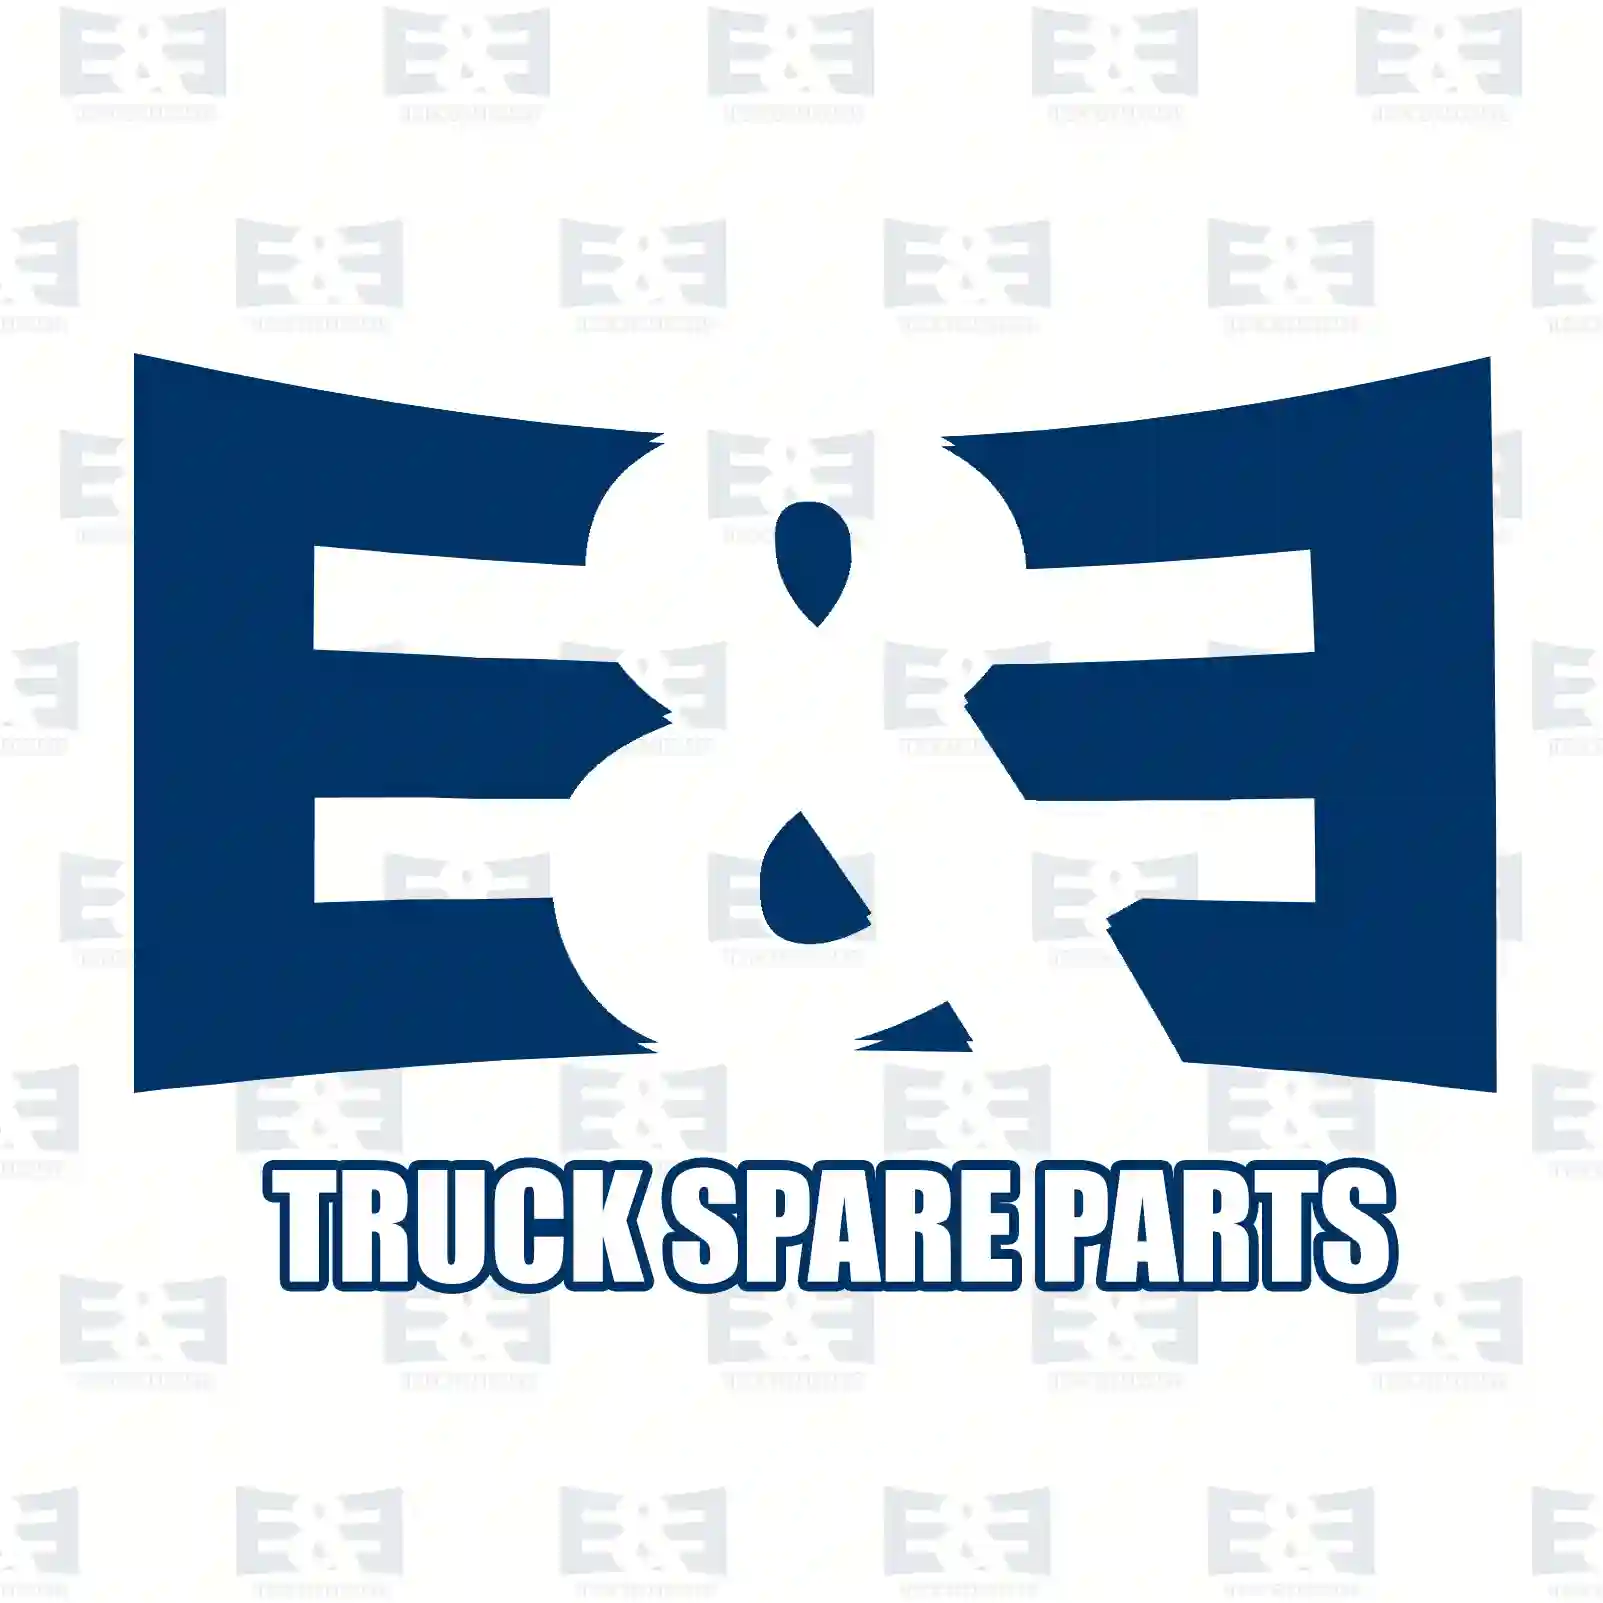 Oil seal, 2E2284022, 42548295, 93163213, 36965030001, N1011013959, N1011013961, 0139975946, 0239972647, 011013959, 072132300, 1415136, 1438136, 85109330, ZG02710-0008 ||  2E2284022 E&E Truck Spare Parts | Truck Spare Parts, Auotomotive Spare Parts Oil seal, 2E2284022, 42548295, 93163213, 36965030001, N1011013959, N1011013961, 0139975946, 0239972647, 011013959, 072132300, 1415136, 1438136, 85109330, ZG02710-0008 ||  2E2284022 E&E Truck Spare Parts | Truck Spare Parts, Auotomotive Spare Parts